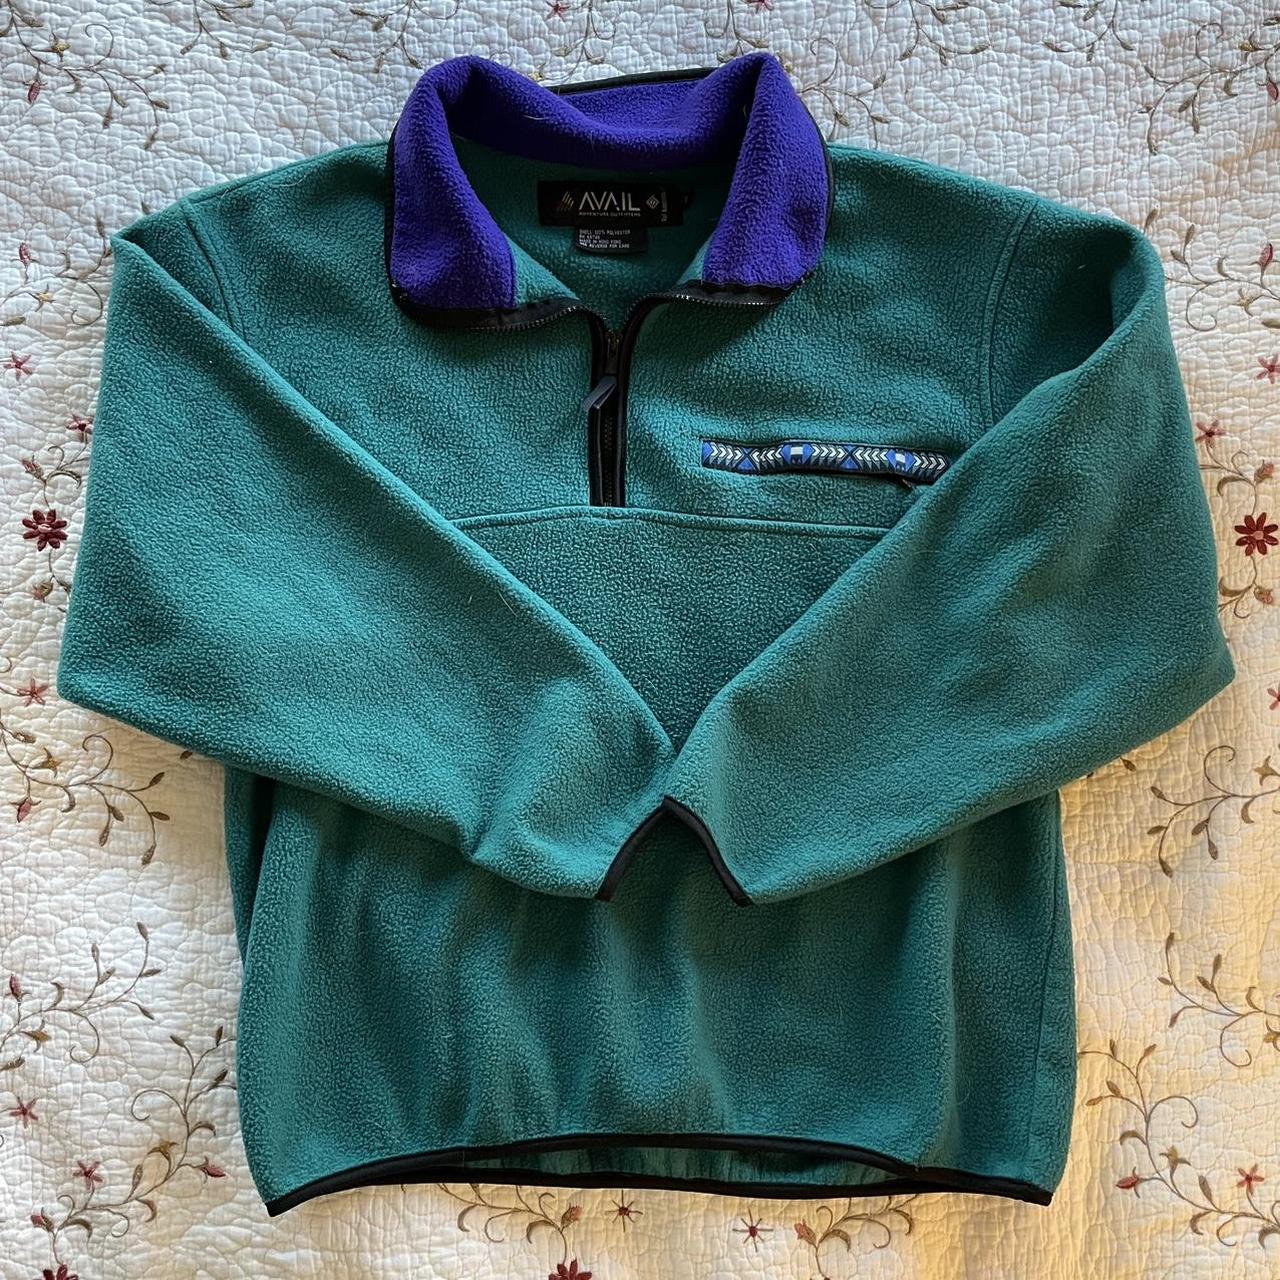 Avail London Men's Blue and Purple Sweatshirt